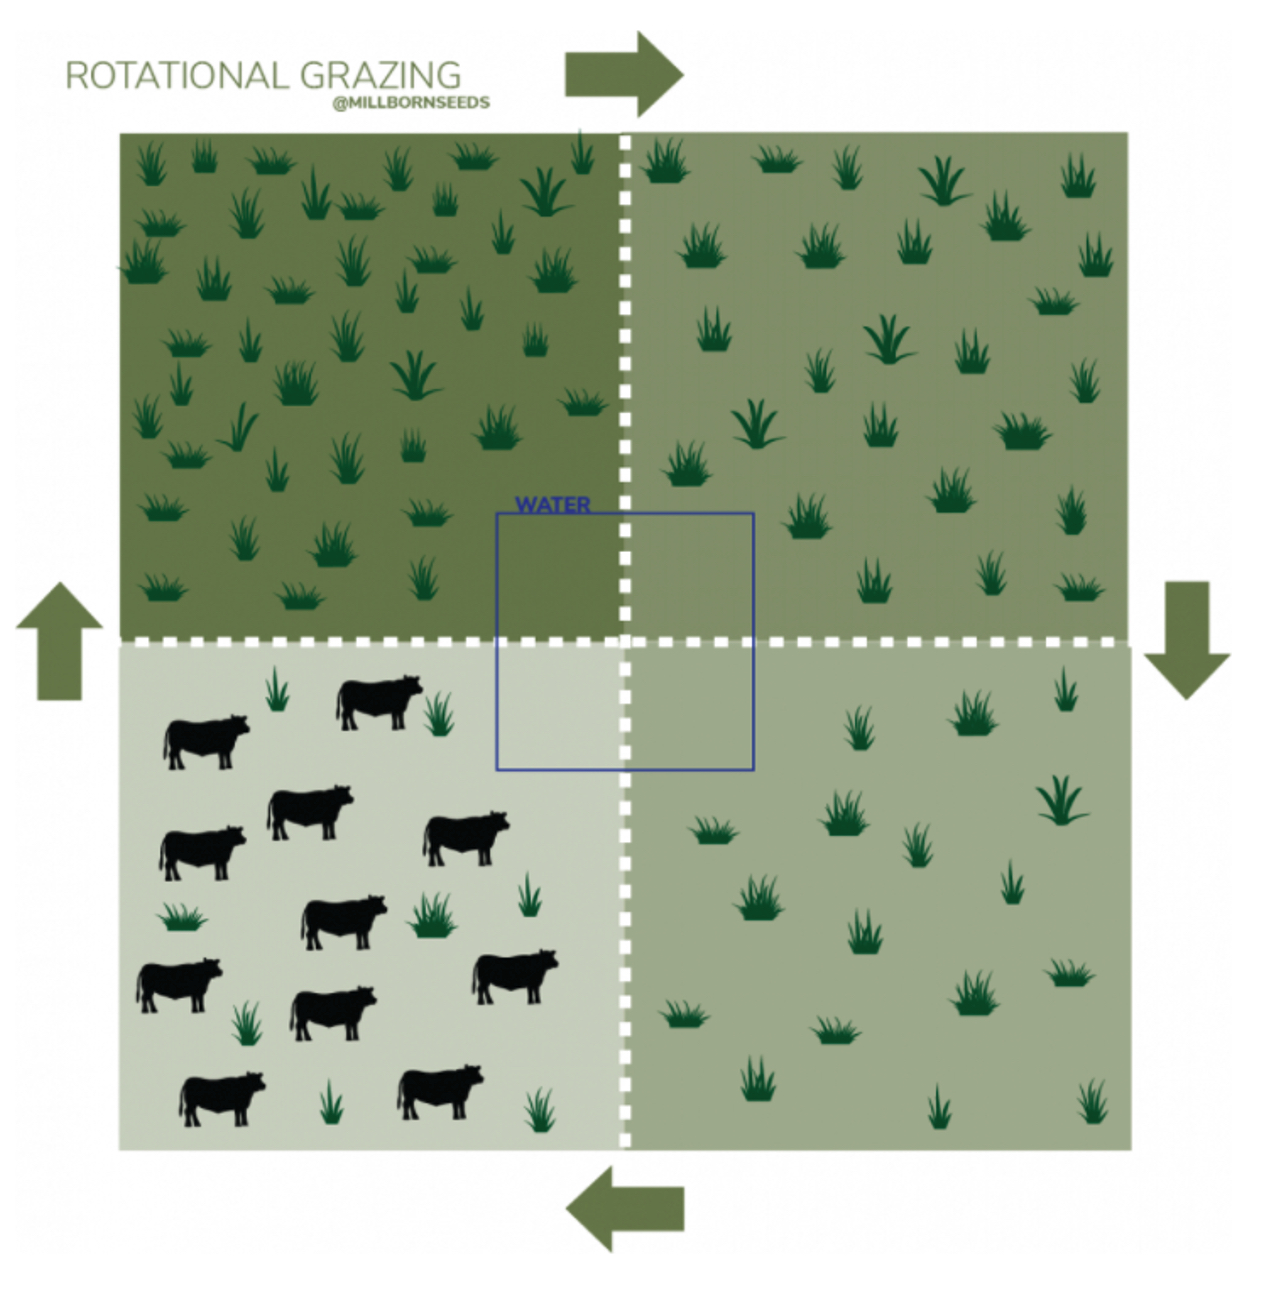 A visualization of rotational grazing